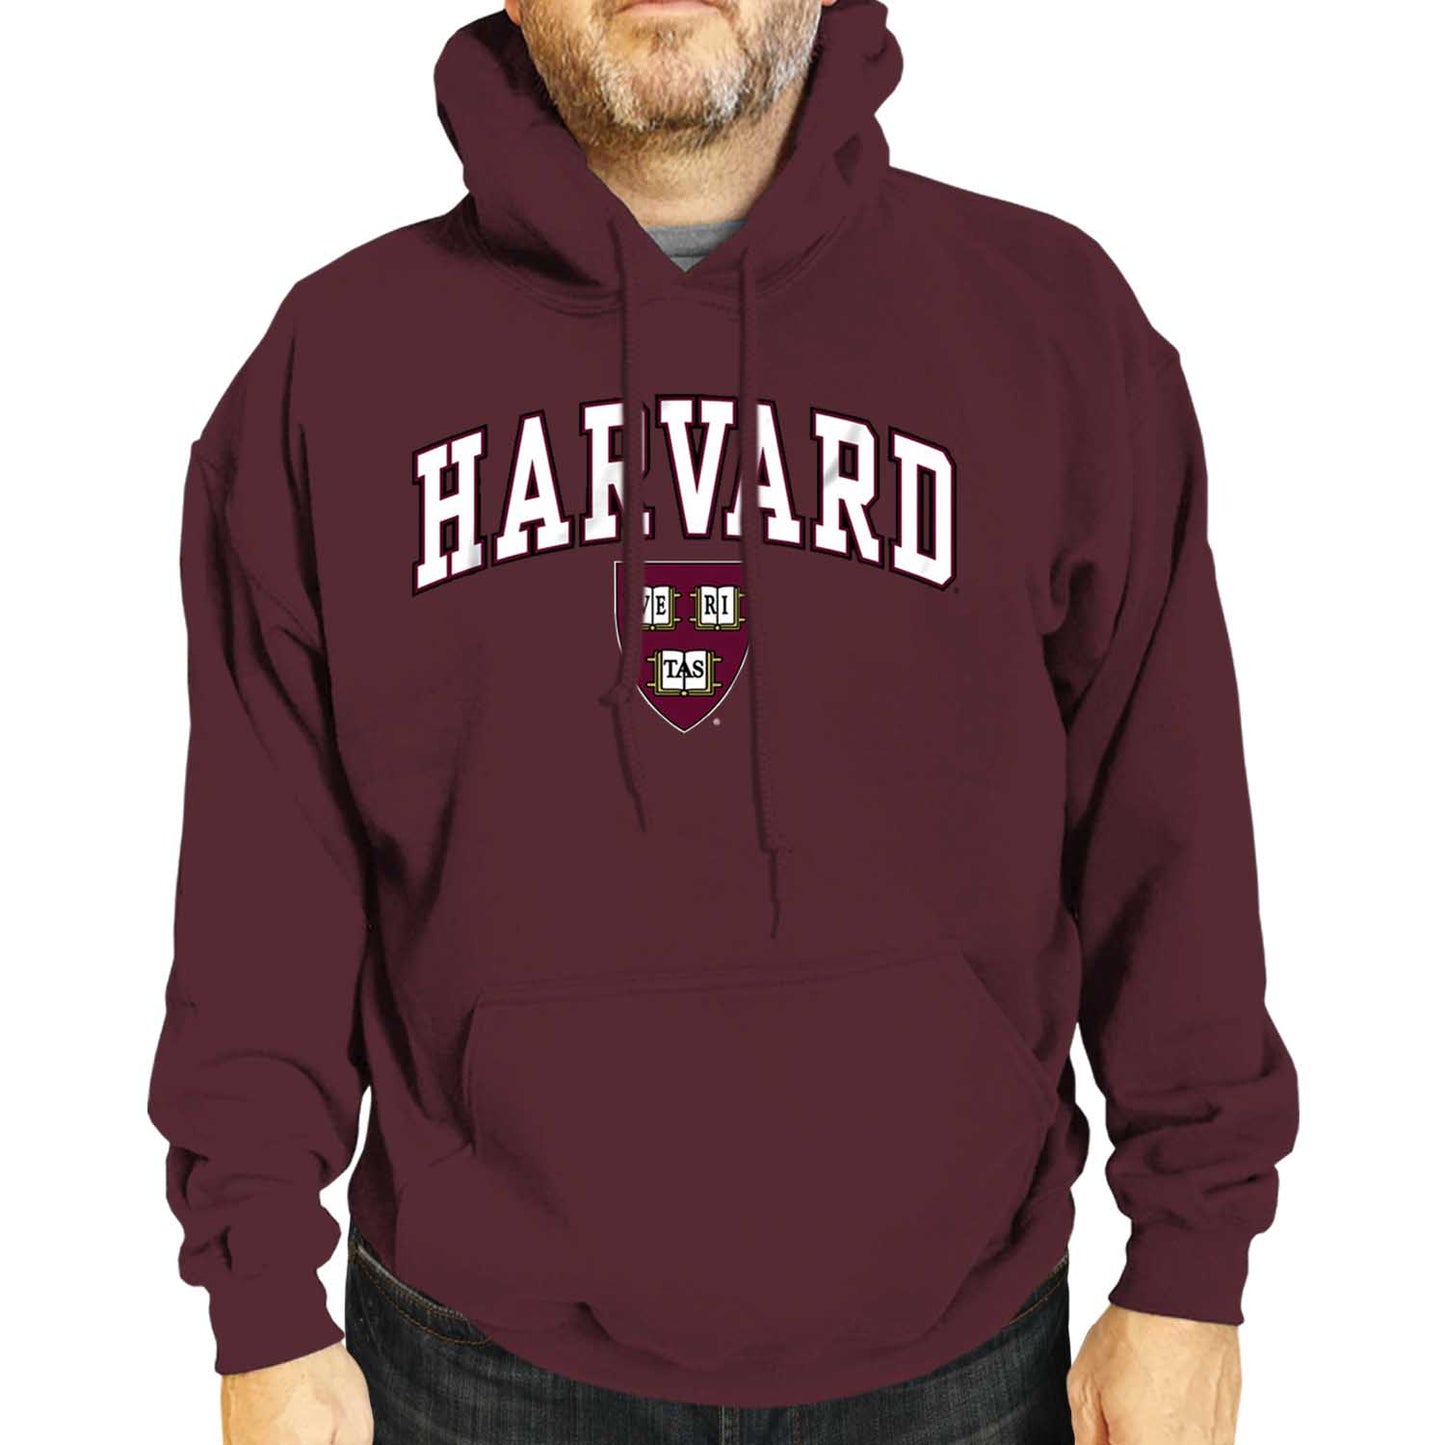 Harvard Crimson Campus Colors Adult Arch & Logo Soft Style Gameday Hooded Sweatshirt  - Maroon